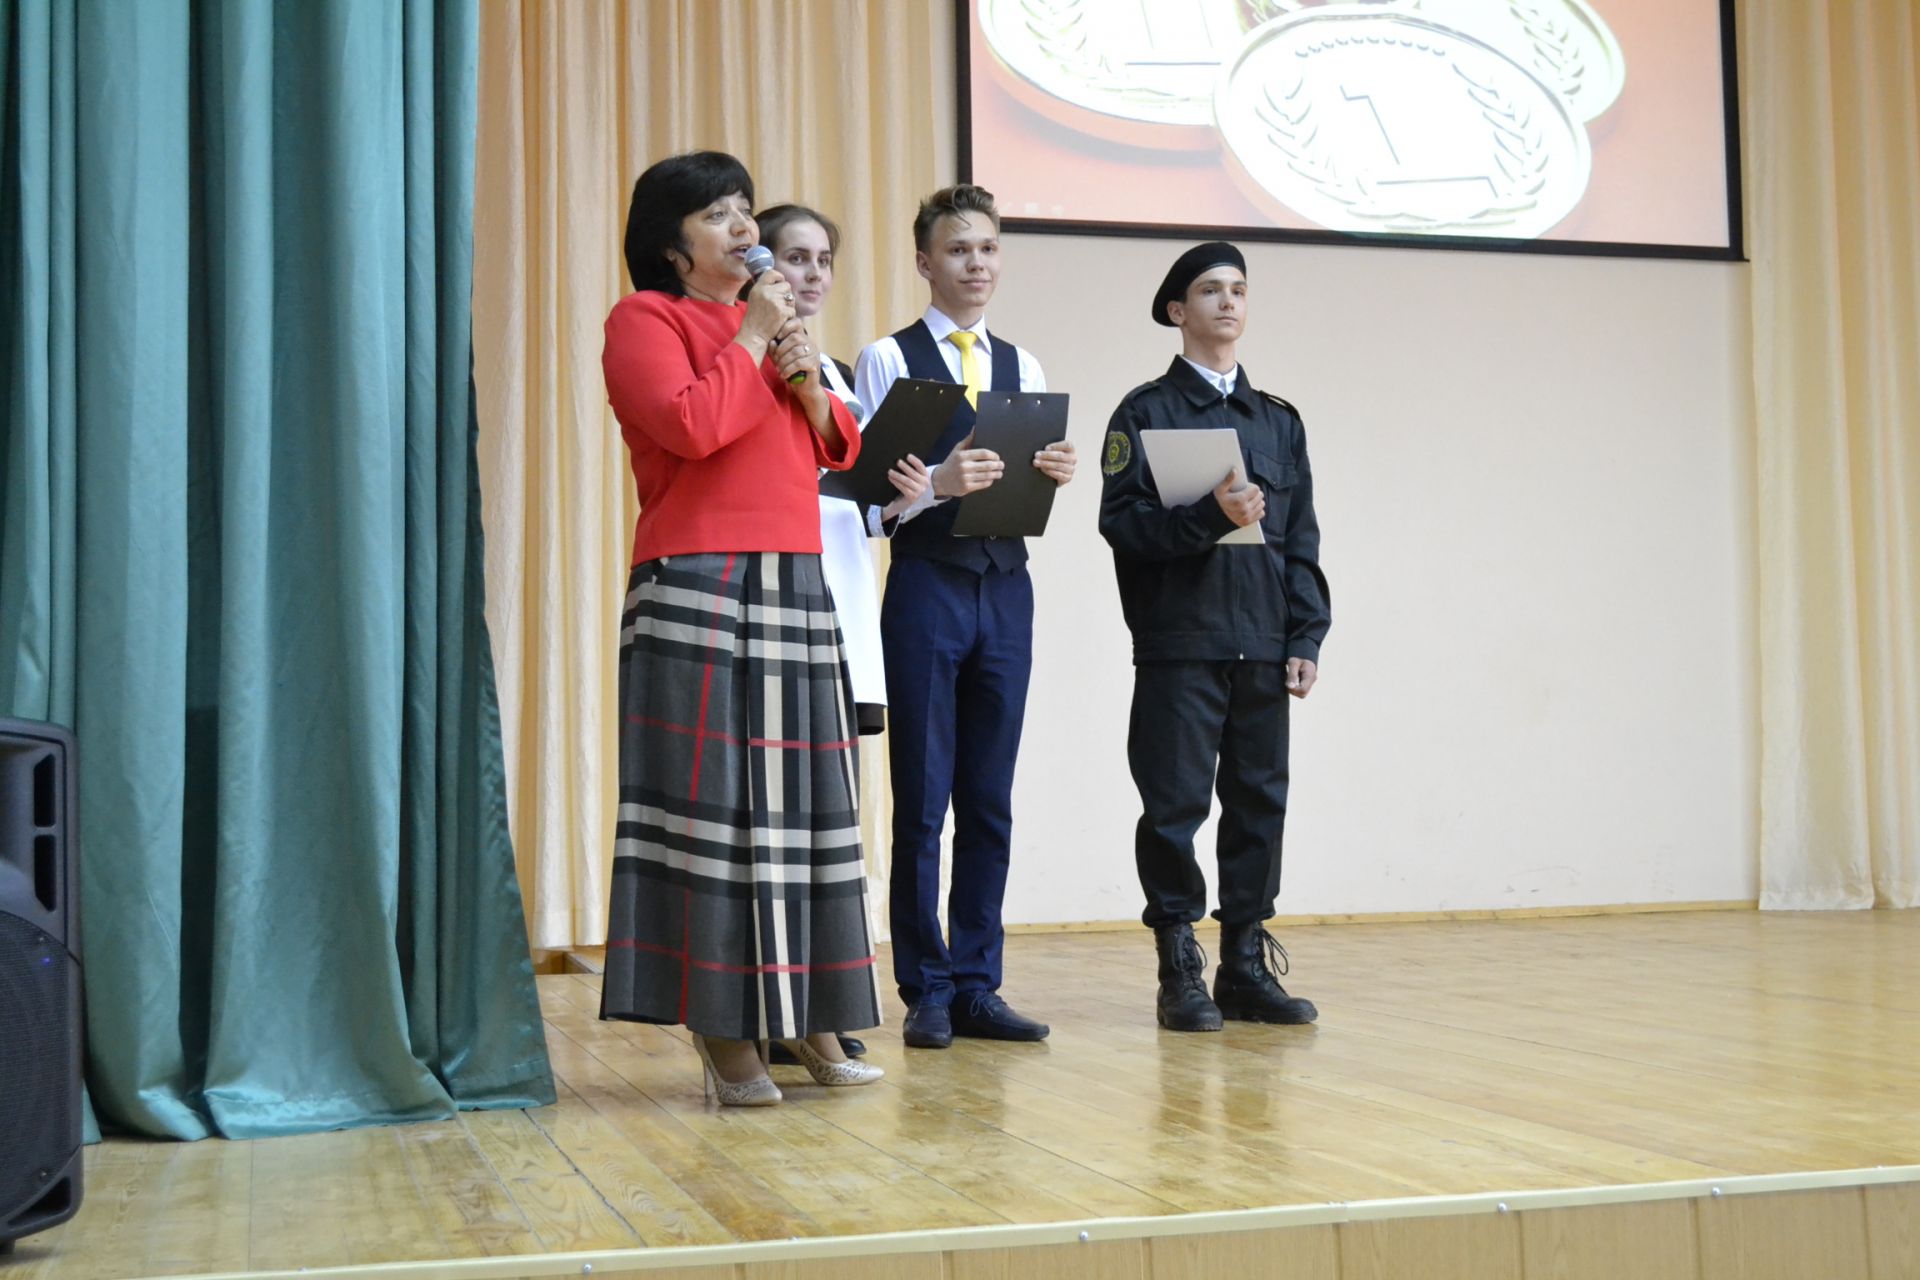 Таланты Камскополянской школы №1 получили заслуженные награды 